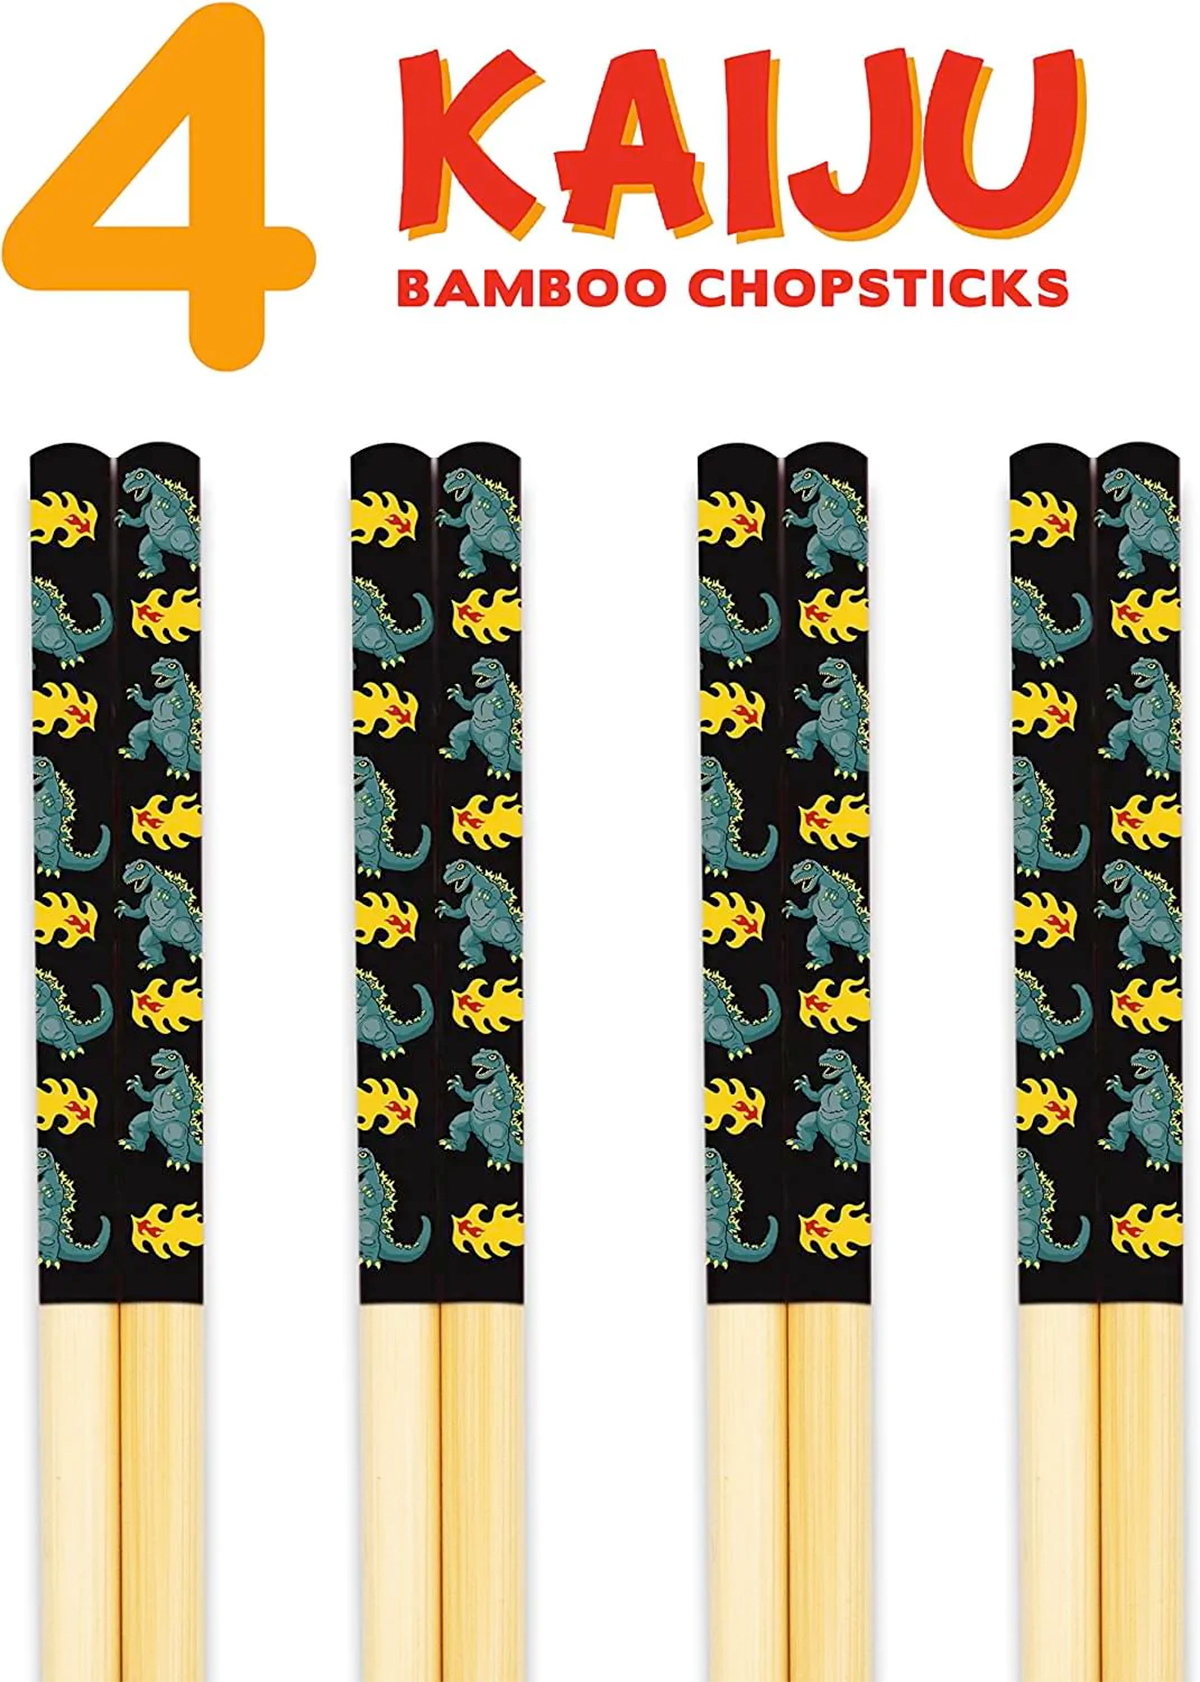 Hashis Godzilla Chopsticks